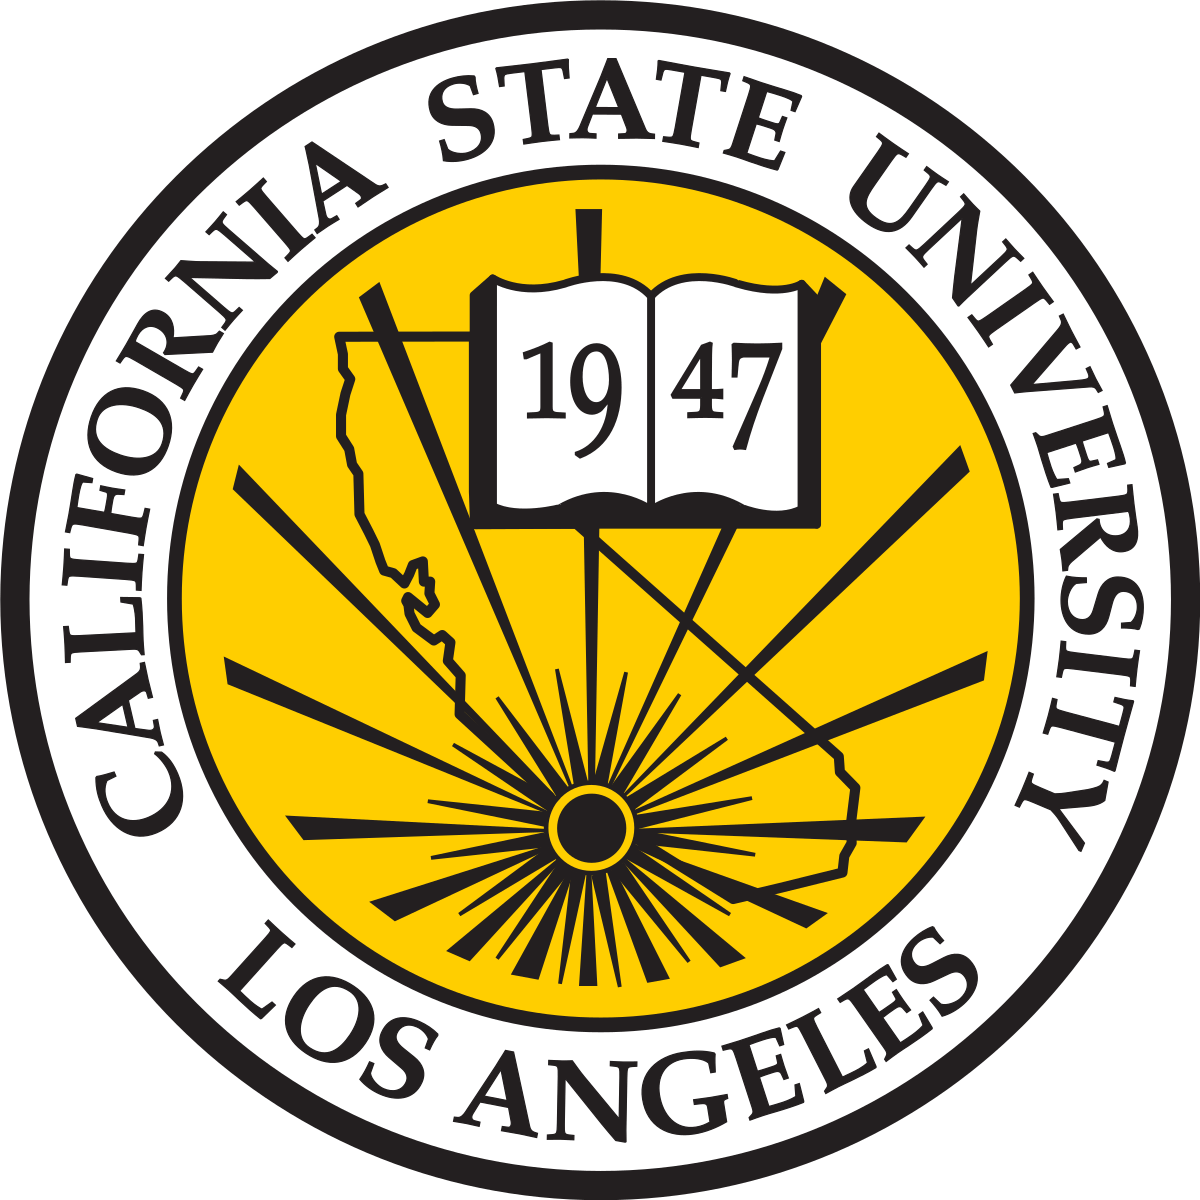 CSULA Logo - California State University, Los Angeles